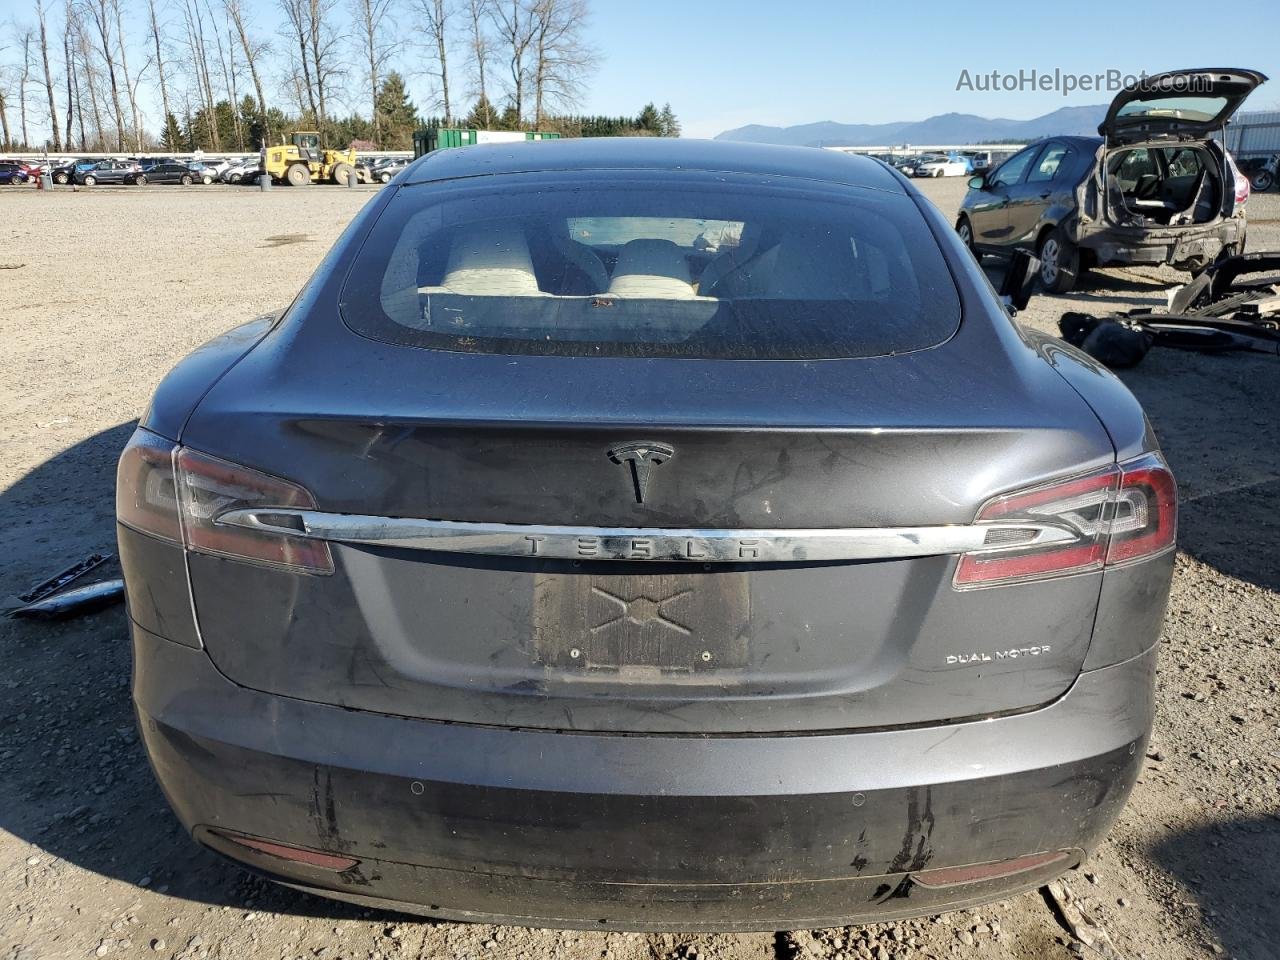 2019 Tesla Model S  Gray vin: 5YJSA1E20KF347810